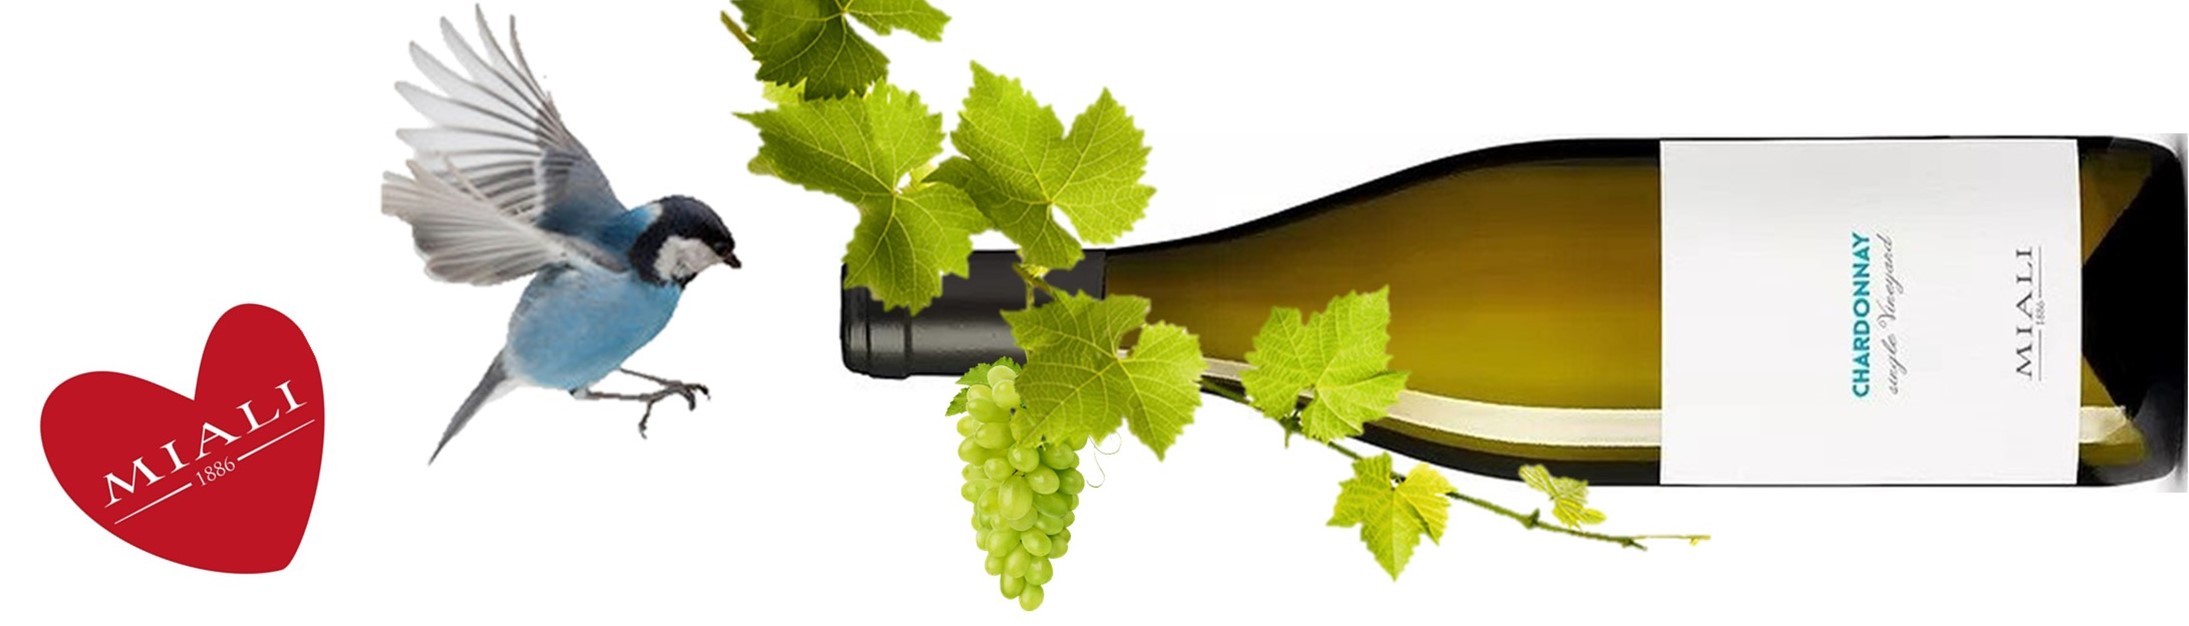 Chardonnay single vineyard MIALI banner